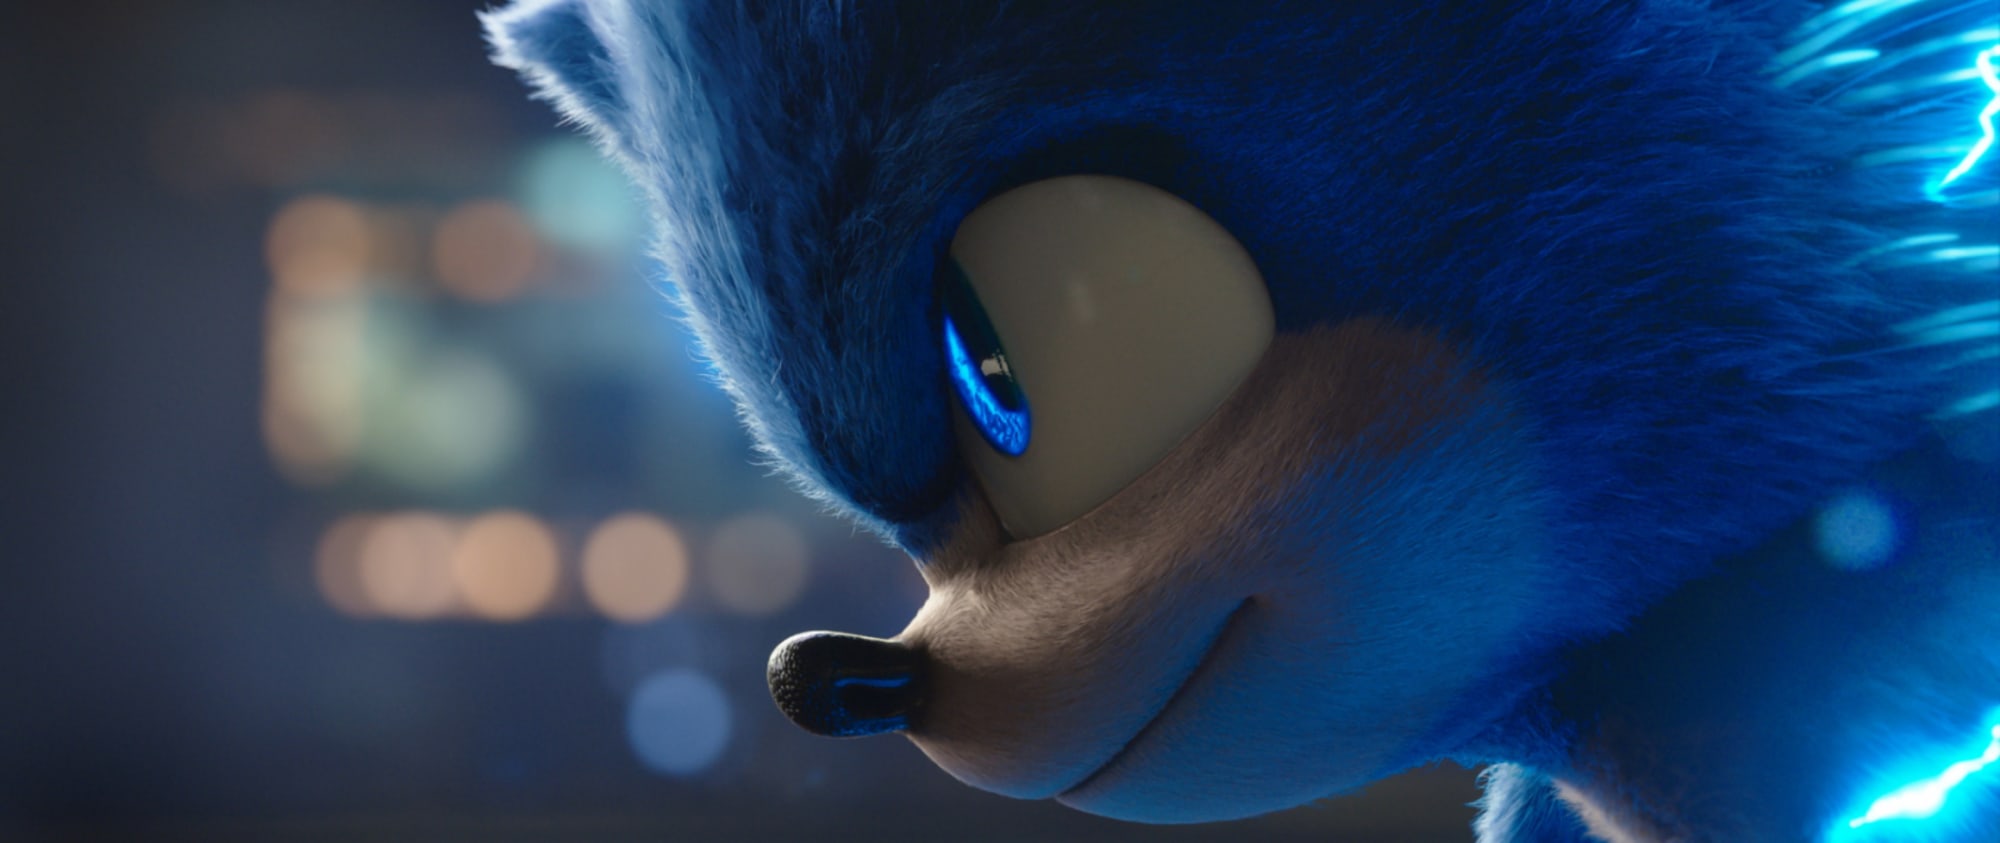 Sonic The Hedgehog 2 - Fetch